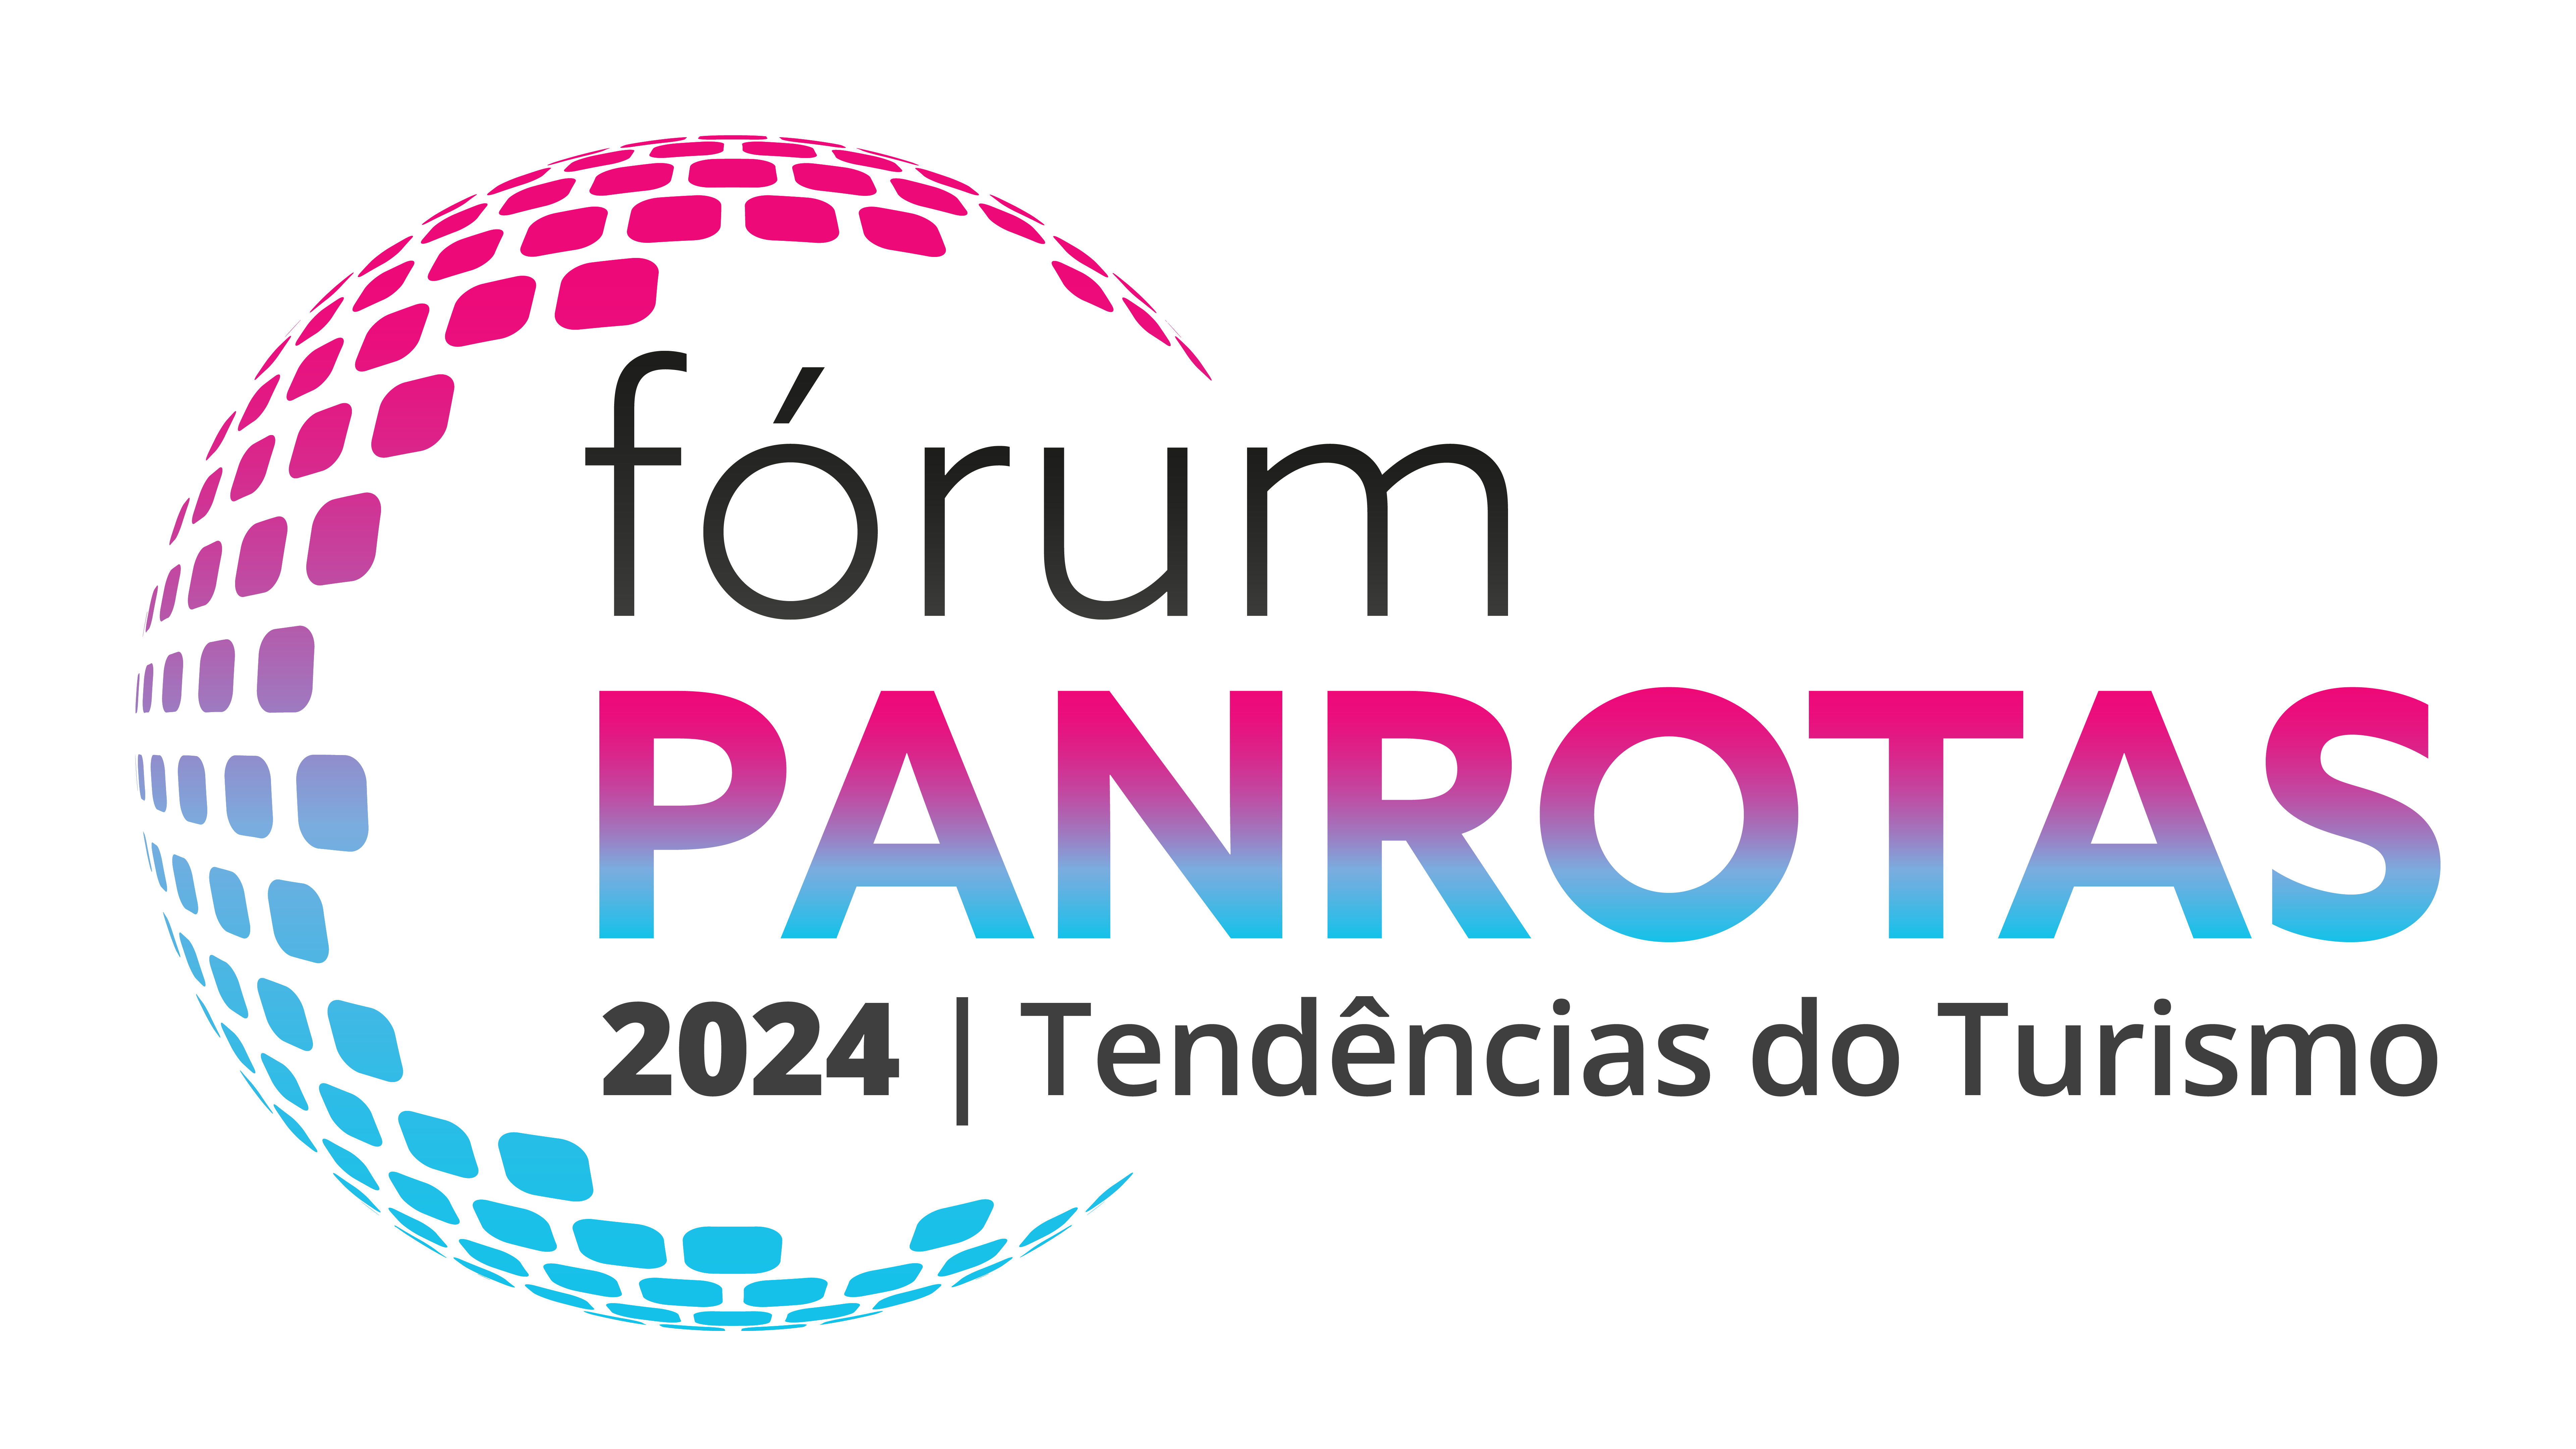 Fórum PANROTAS 2021